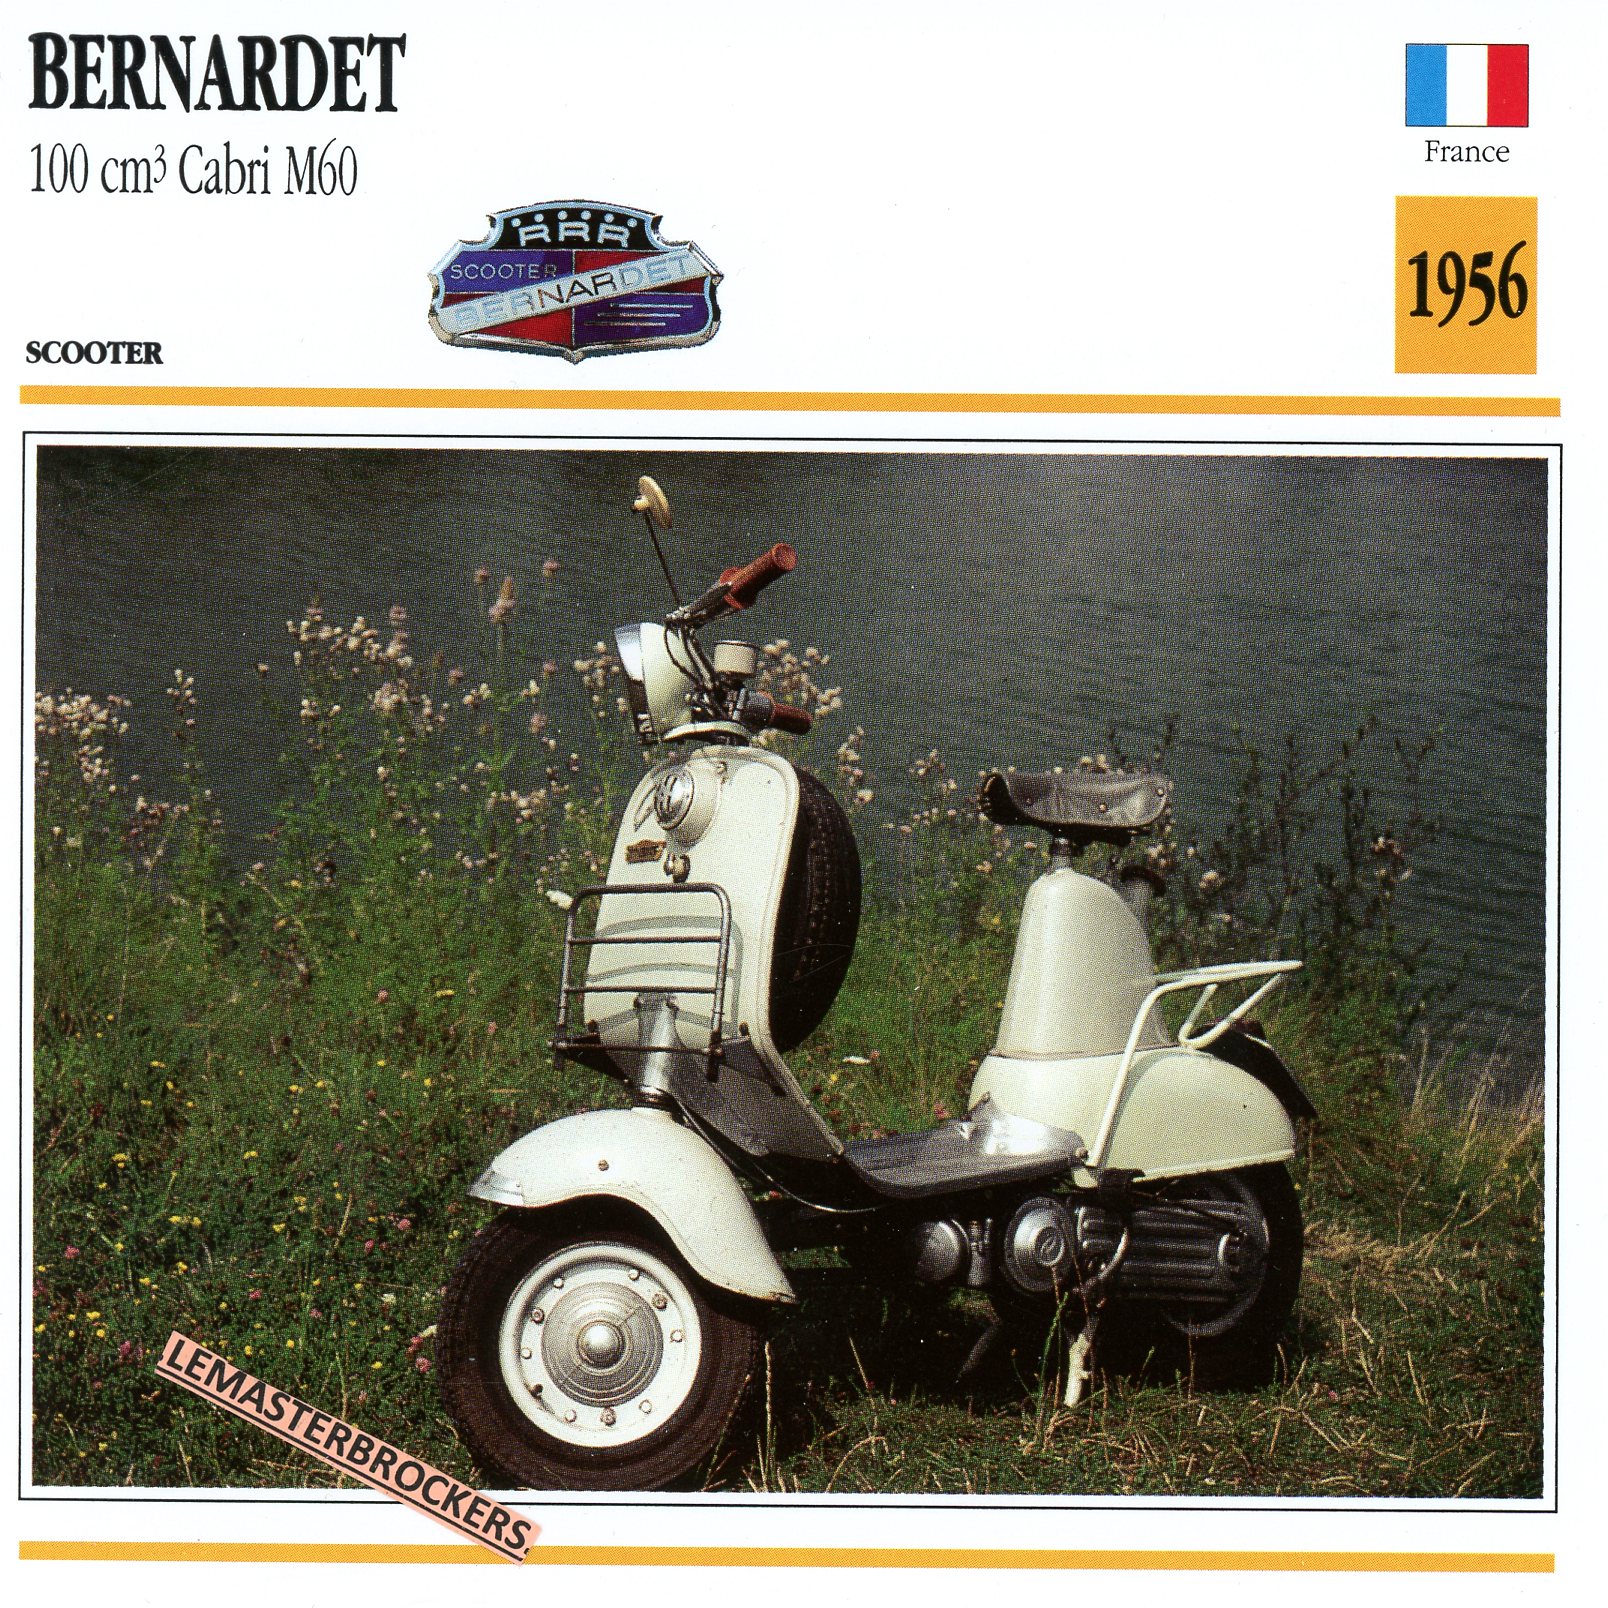 FICHE-SCOOTER-BERNARDER-CABRI-M60-1956-LEMASTERBROCKERS-CARD-MOTORCYCLE